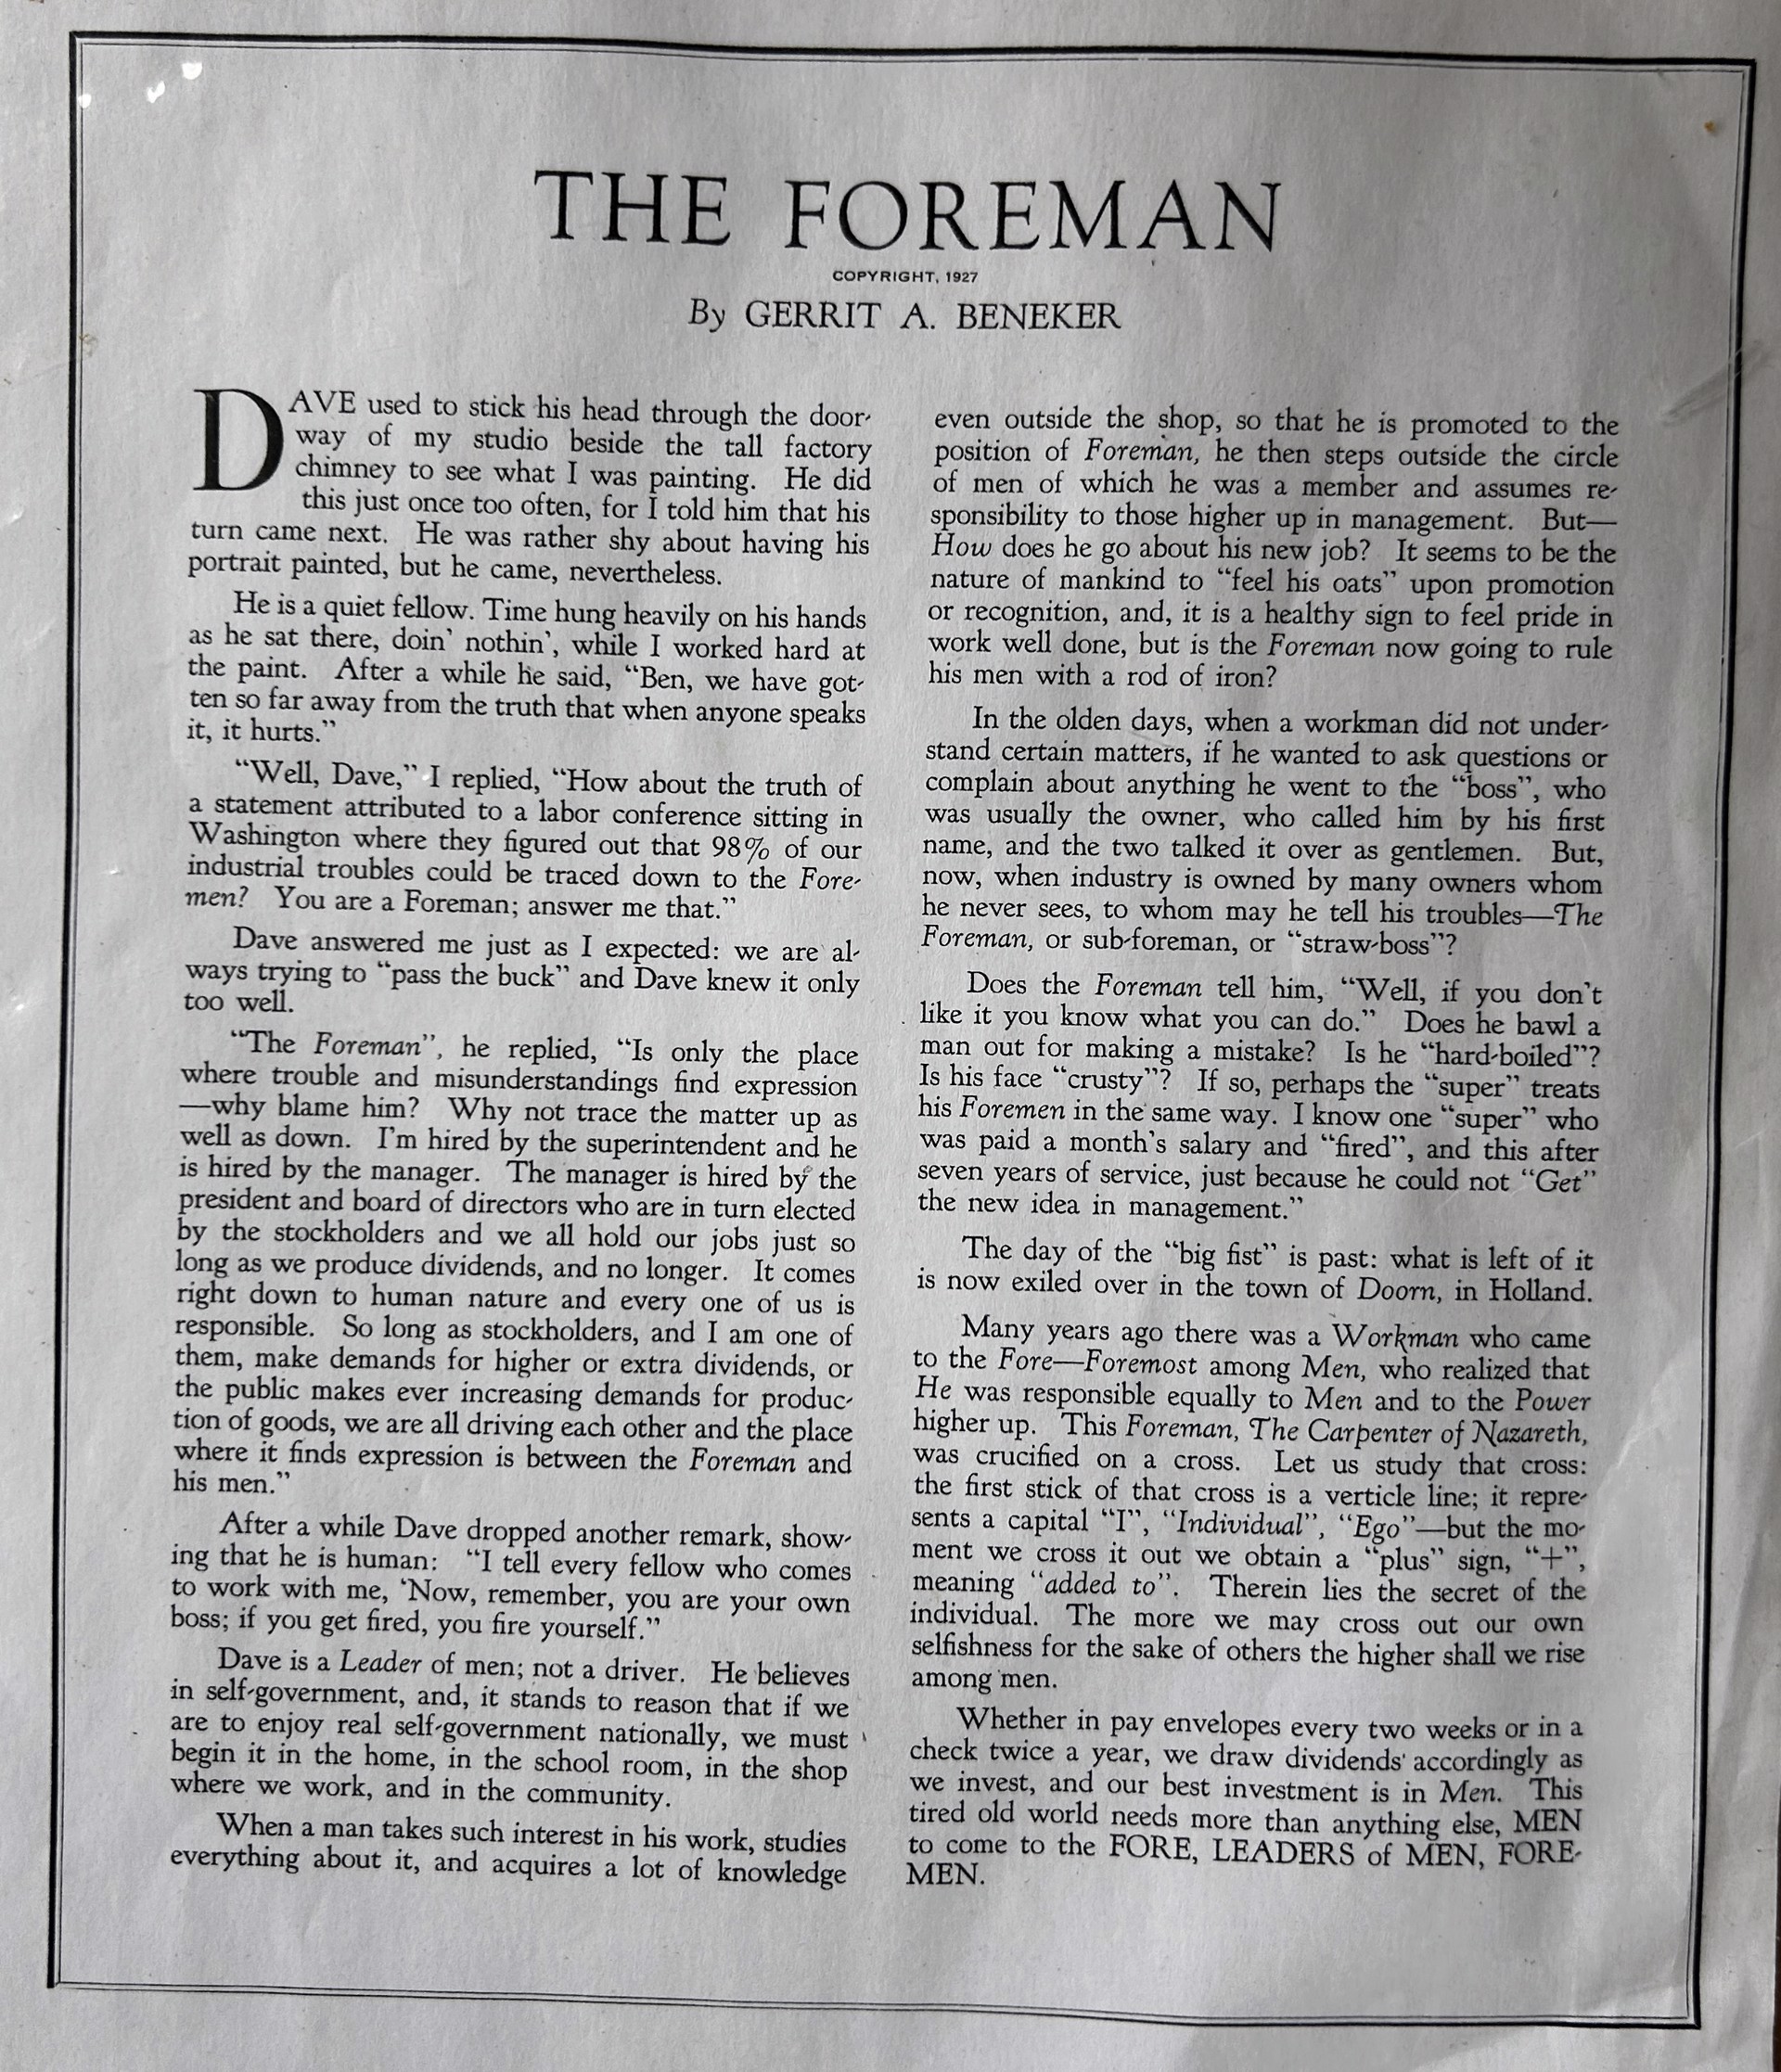 The Foreman by Gerrit Beneker